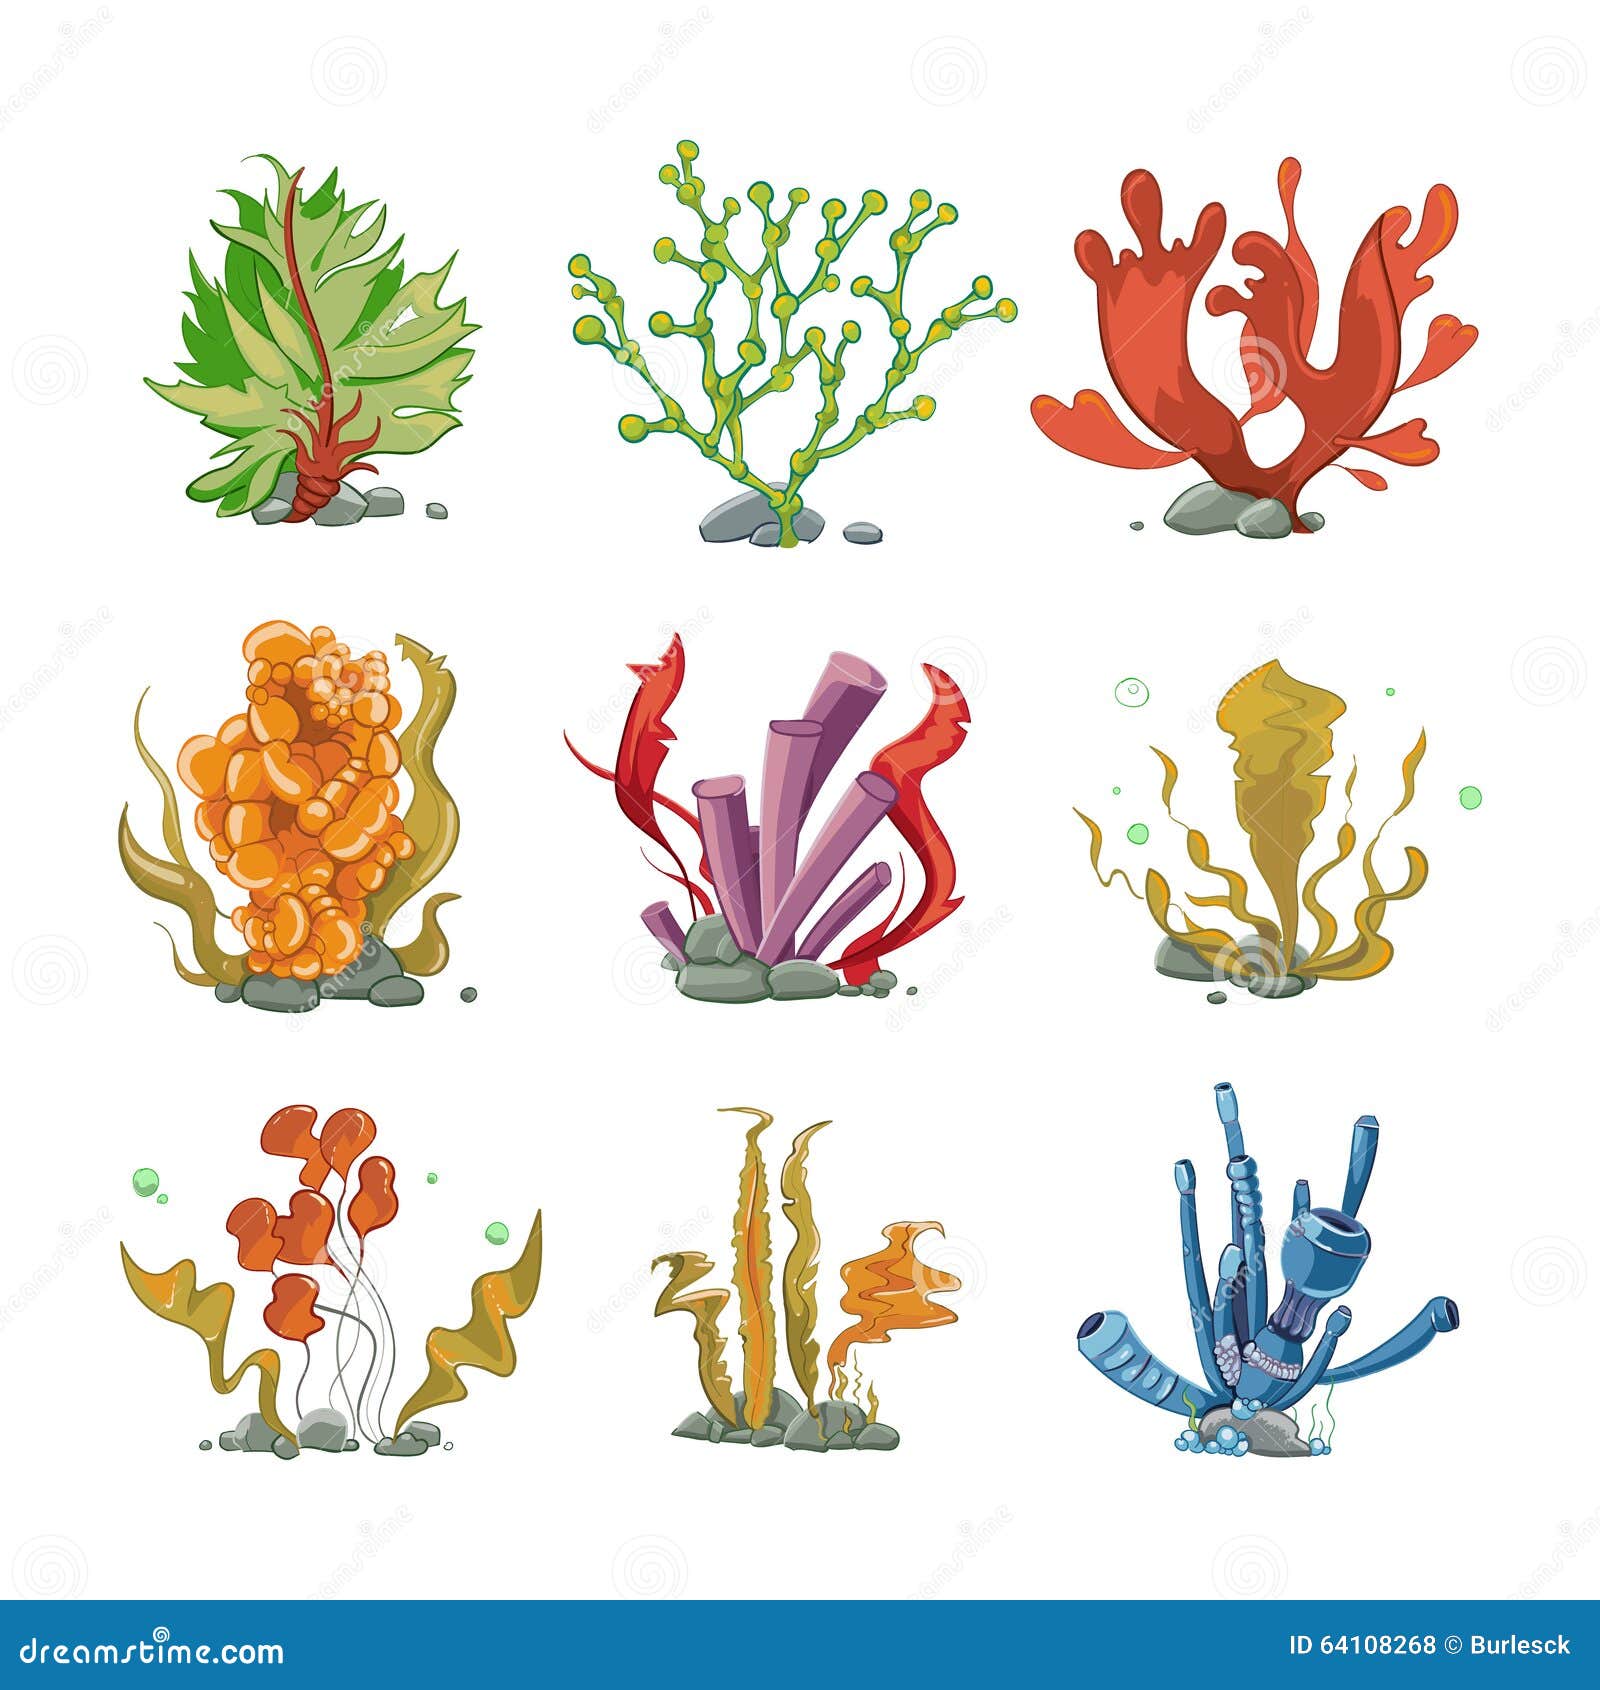 underwater plants clipart - photo #45